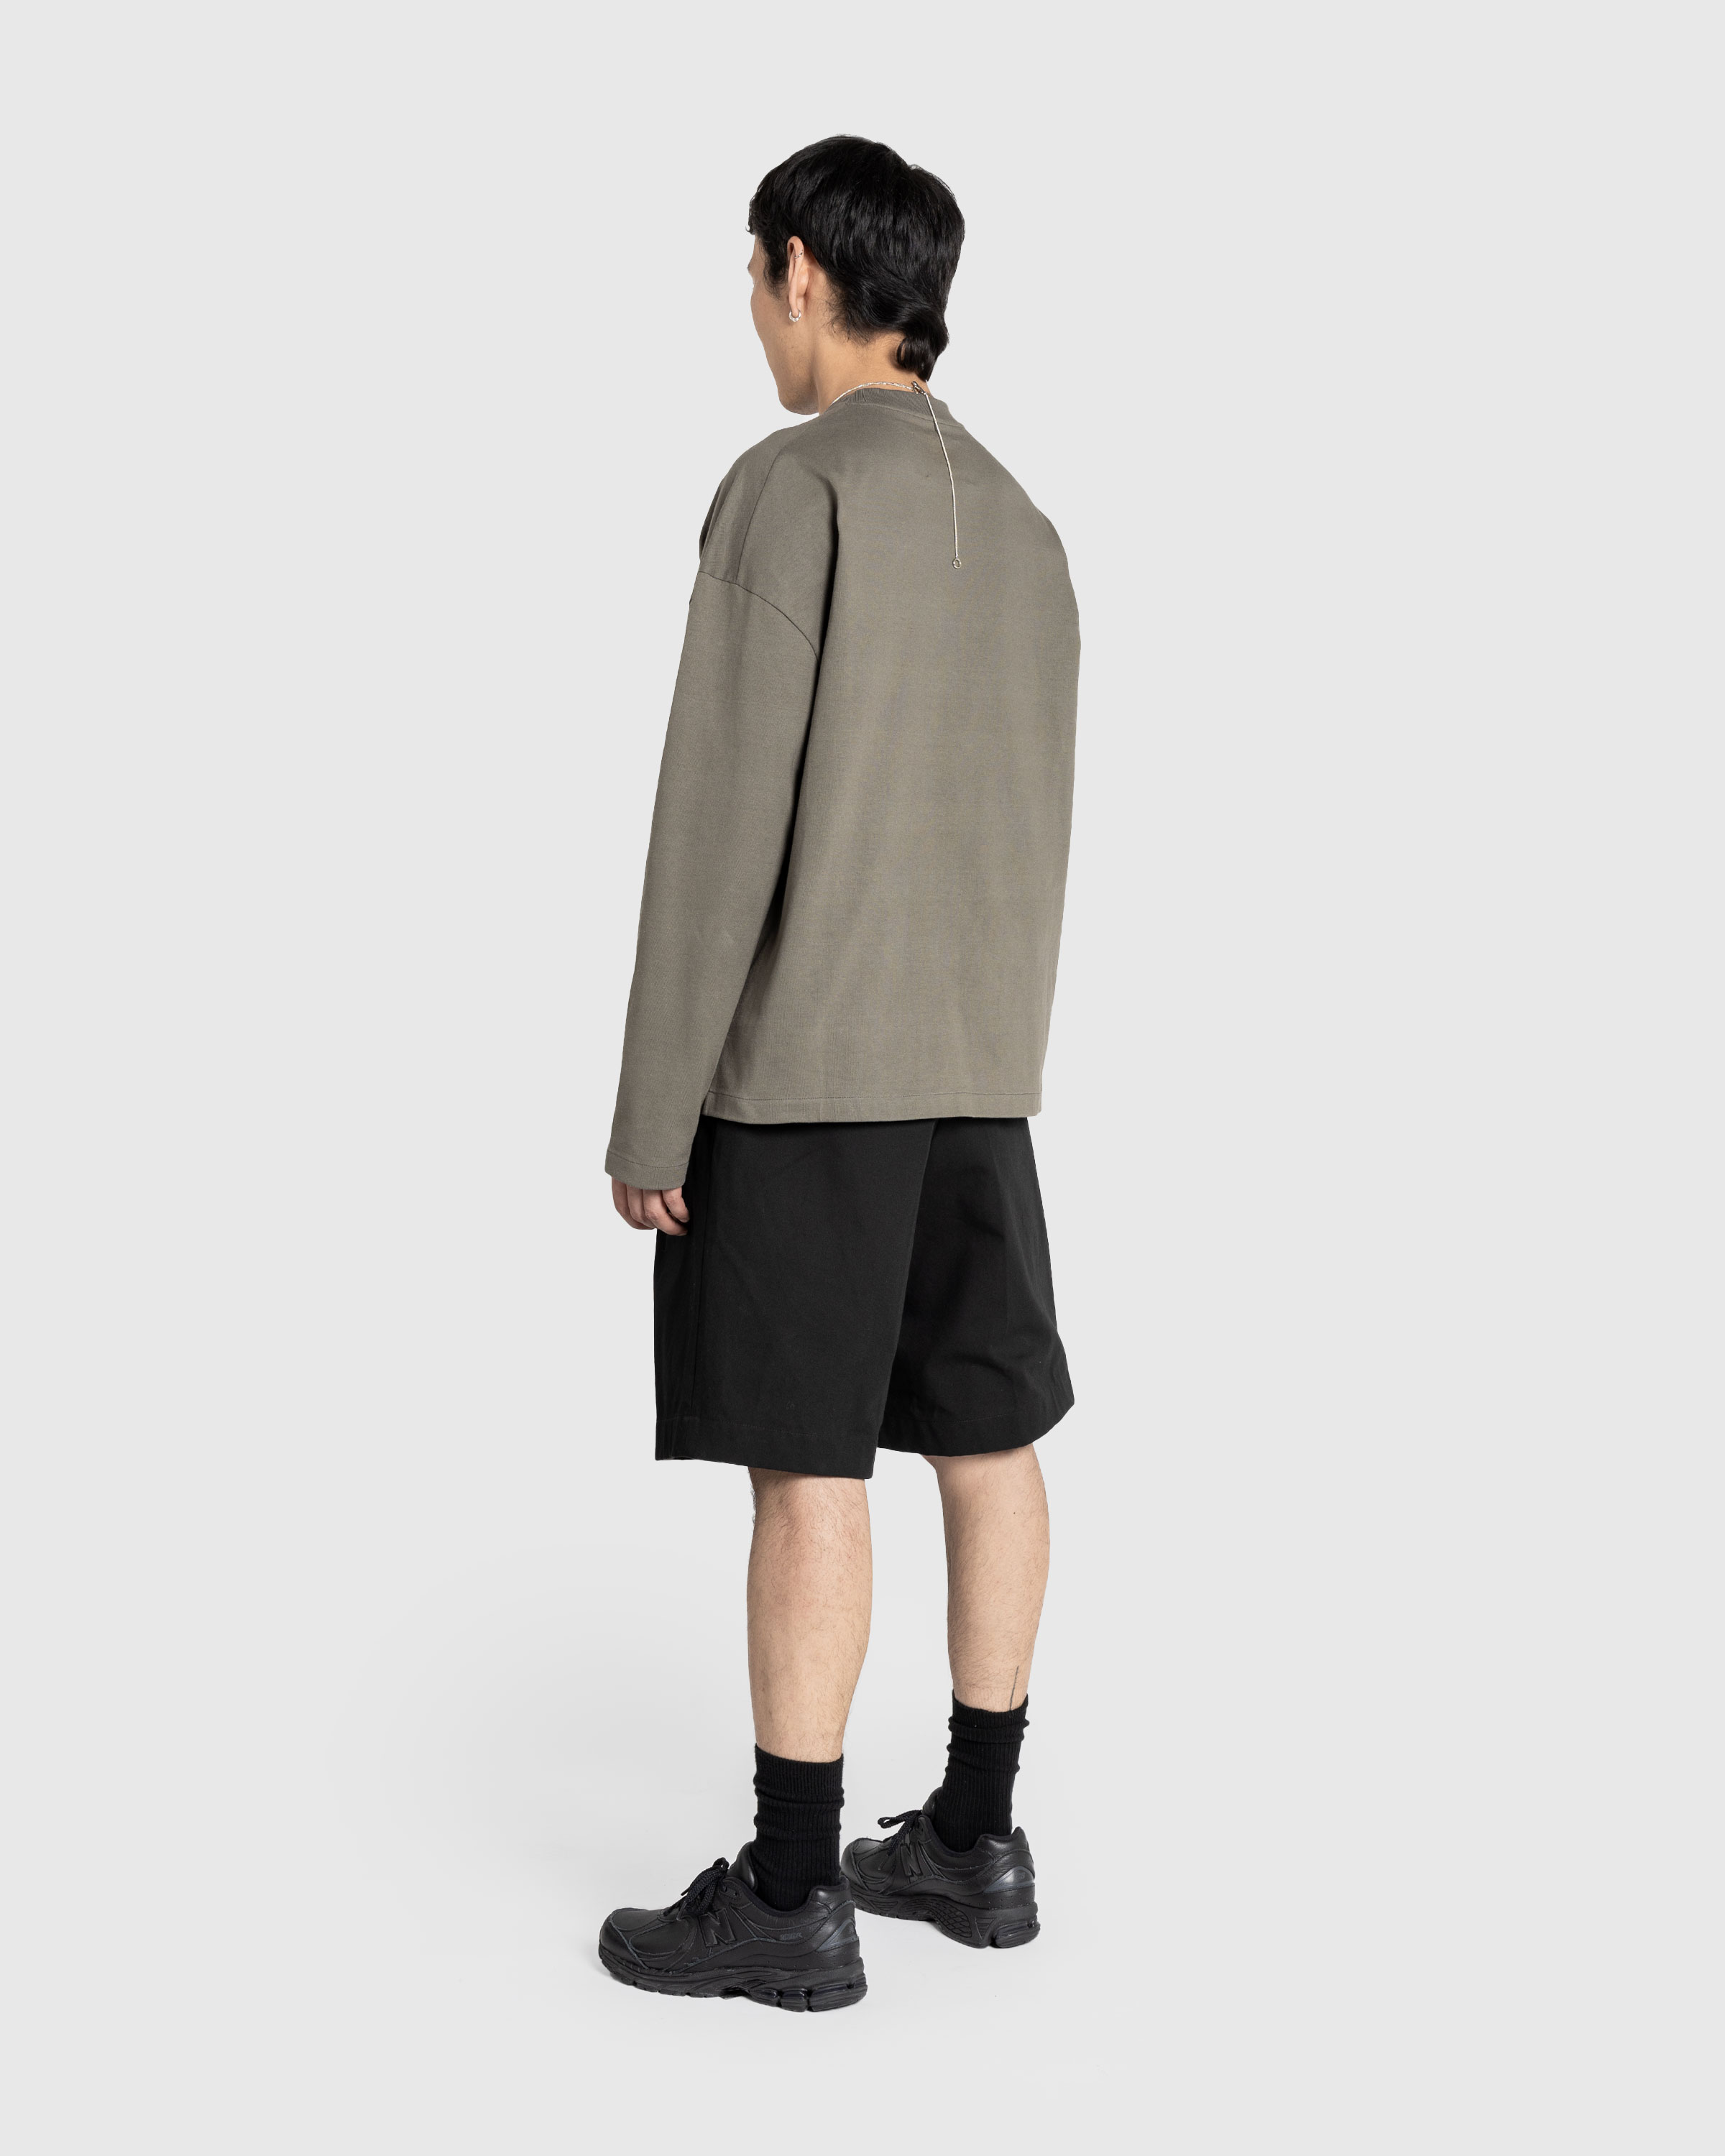 Jil Sander – Trouser 105 Shorts Black - Bermuda Cuts - Black - Image 4